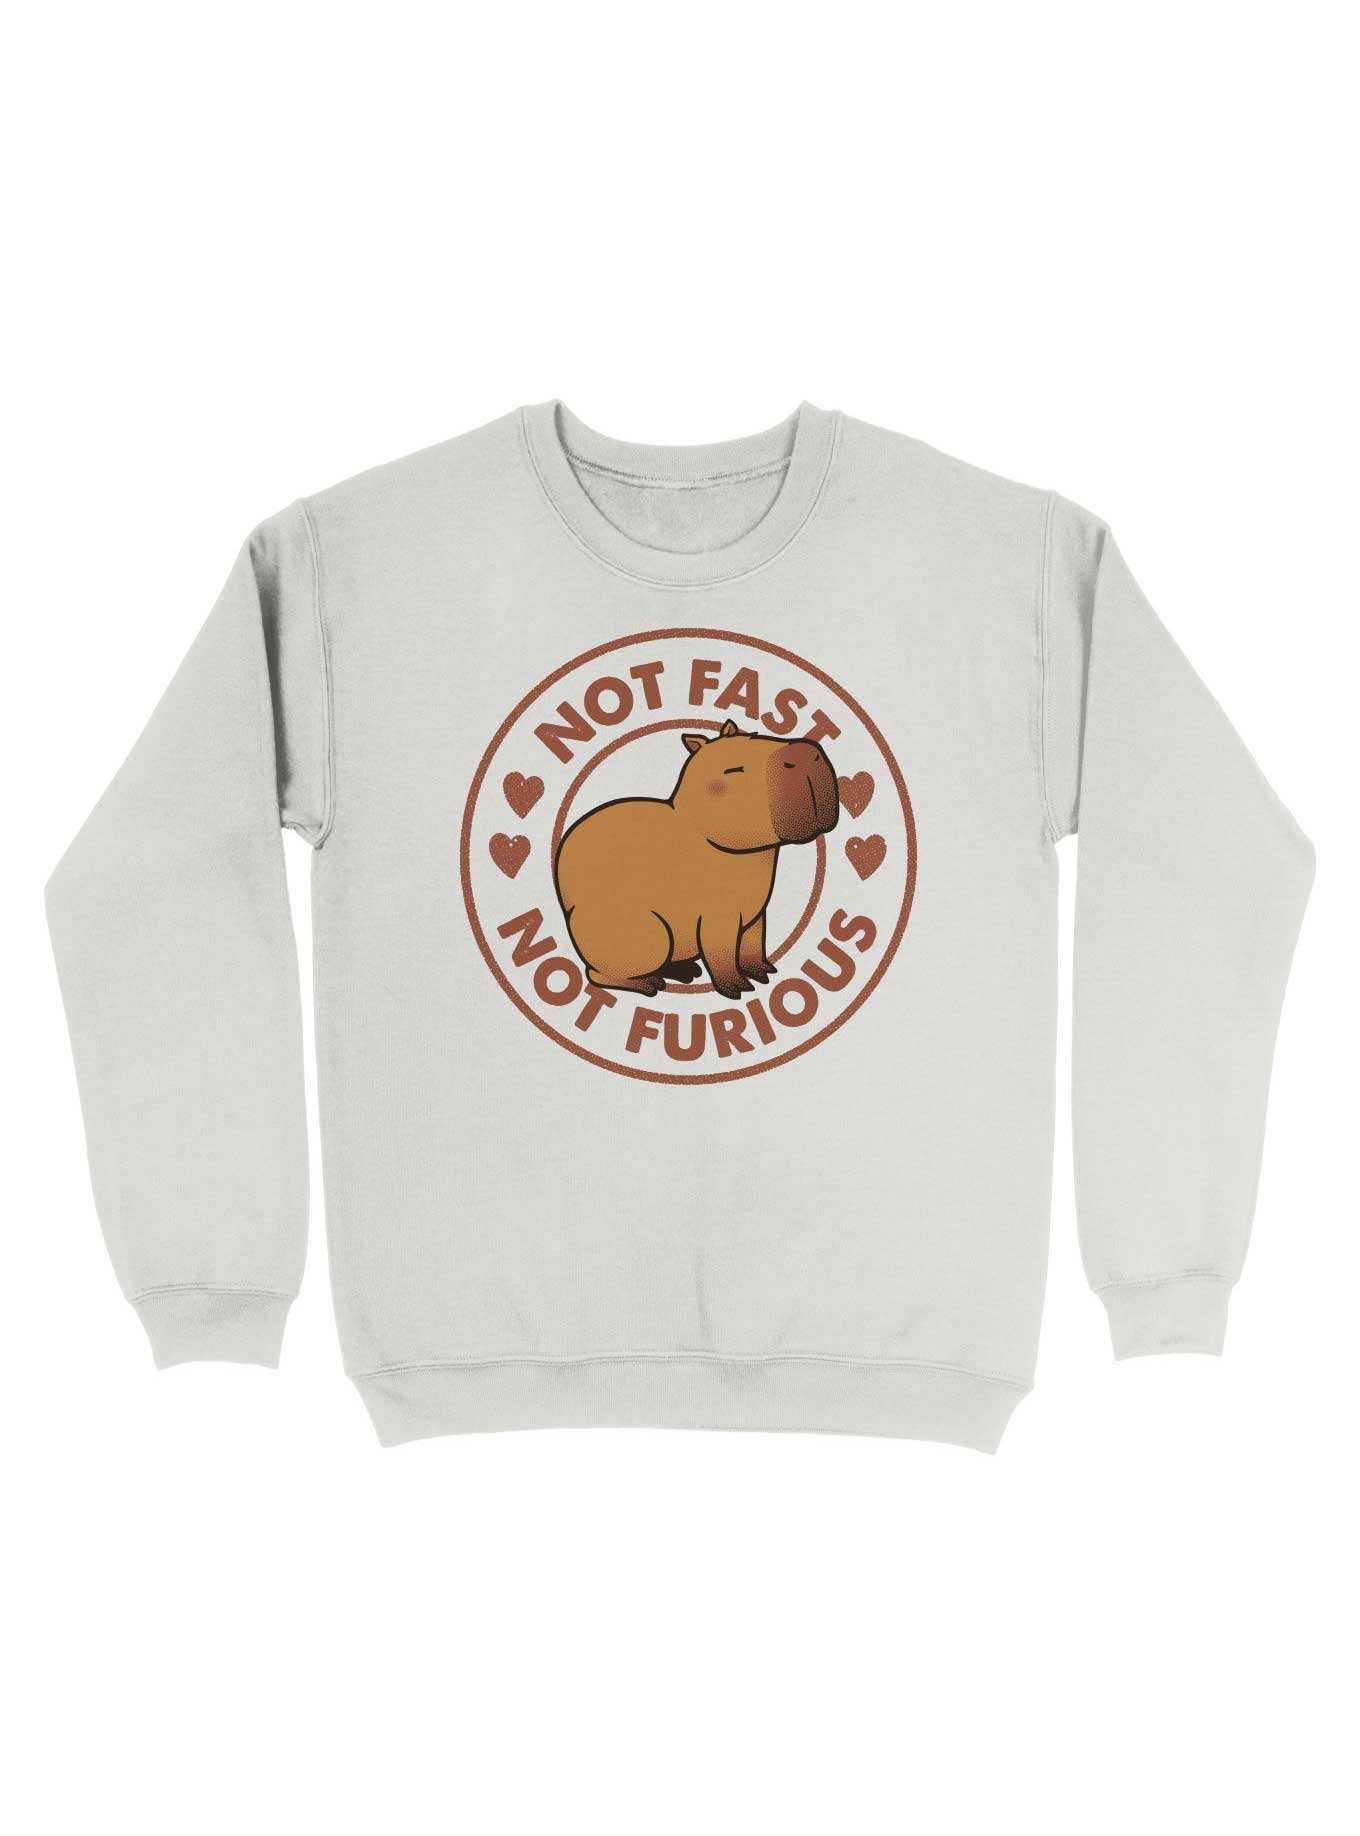 Not Fast Not Furious Capybara Sweatshirt, , hi-res